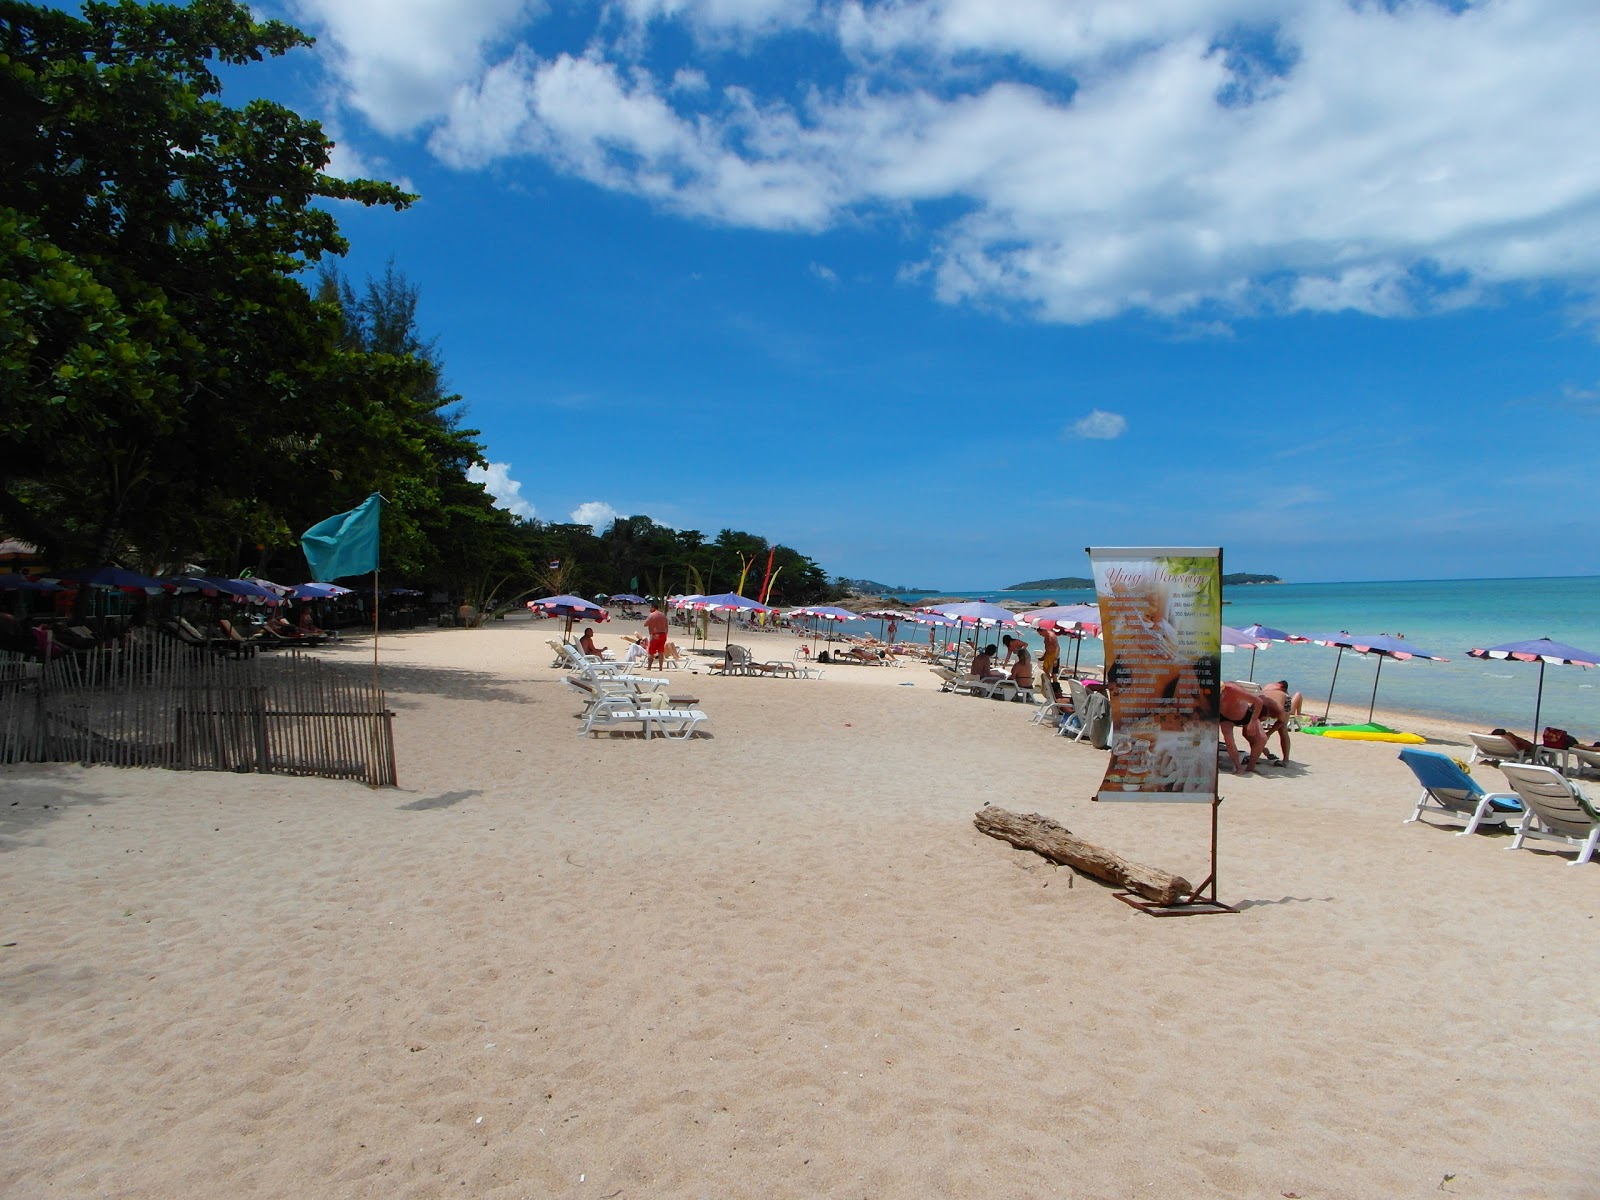 Foto de Chaweng Noy Beach - lugar popular entre os apreciadores de relaxamento